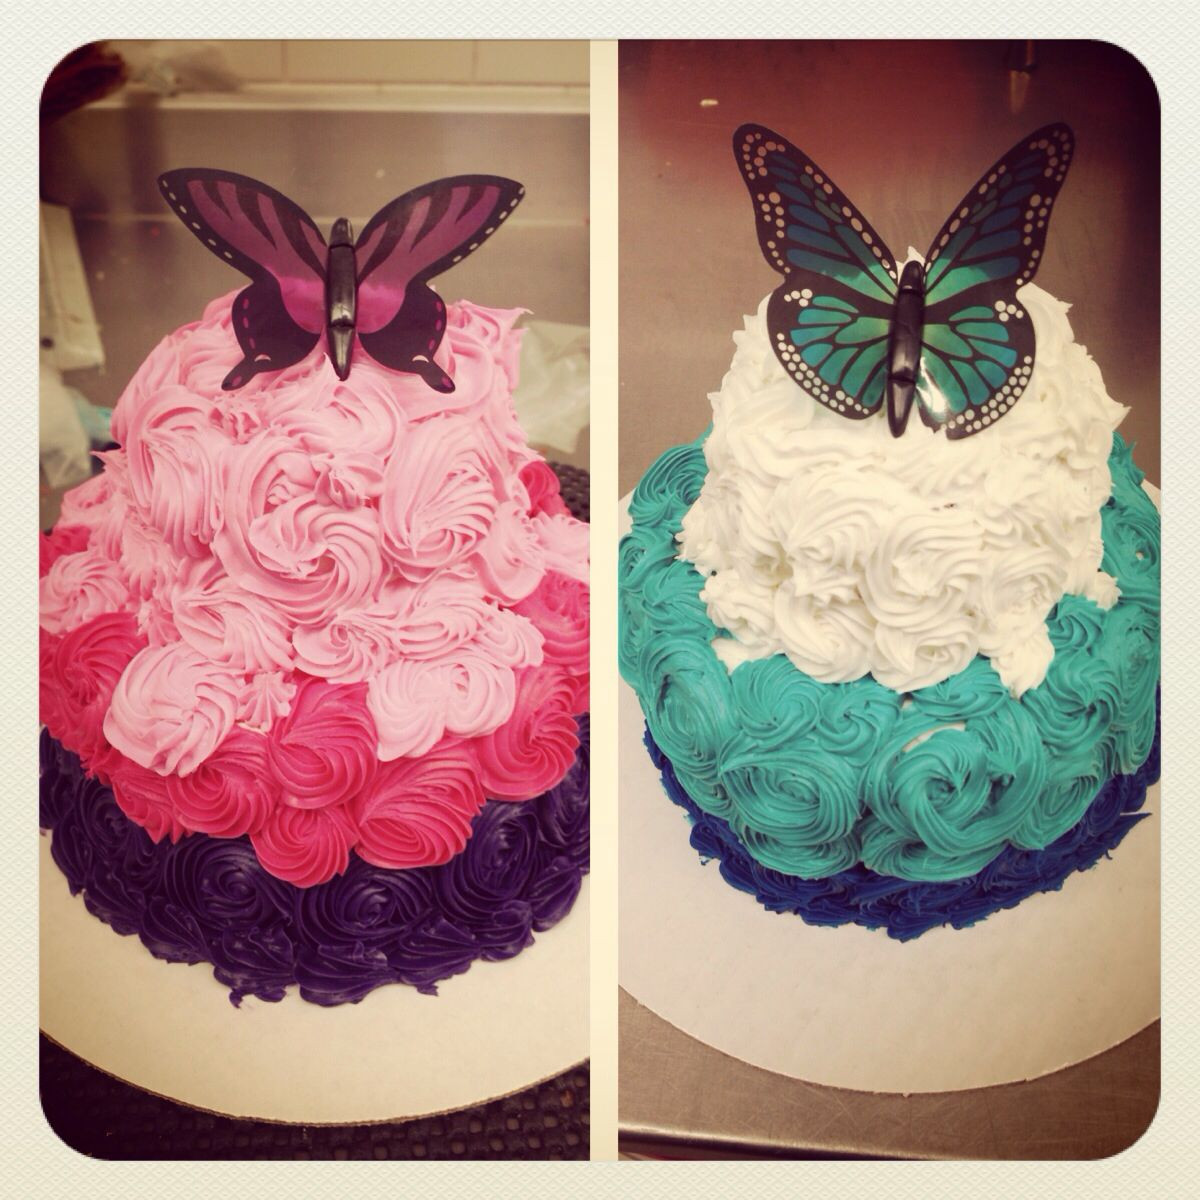 Albertsons Birthday Cake Designs
 Albertsons custom Butterfly Cakes